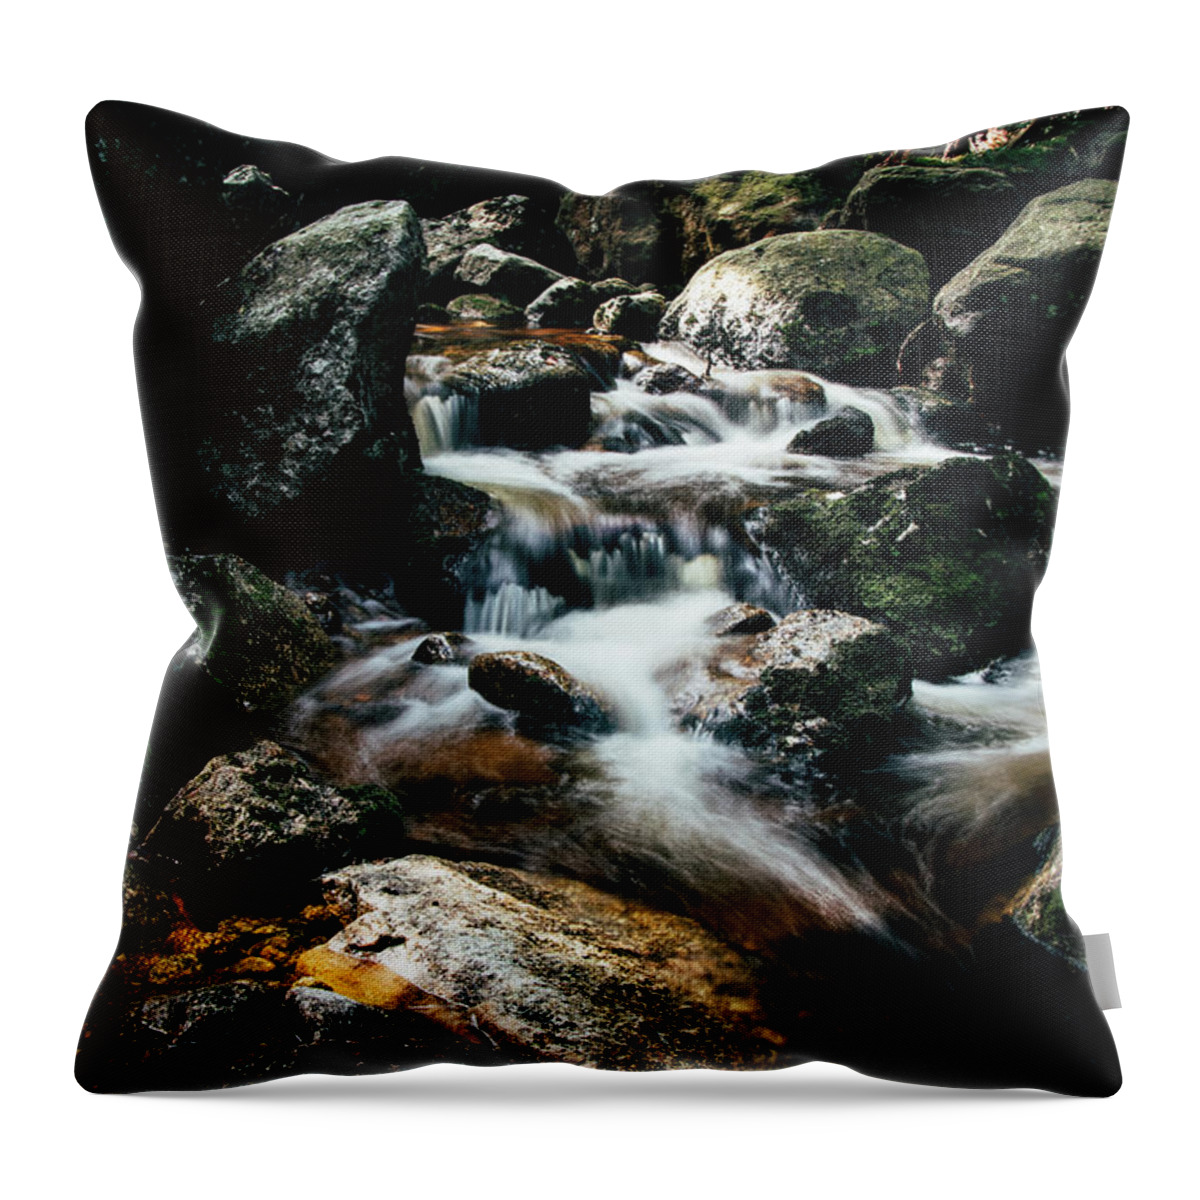 Jizera Mountains Throw Pillow featuring the photograph Picturesque river hidden in the Jizera Mountains by Vaclav Sonnek